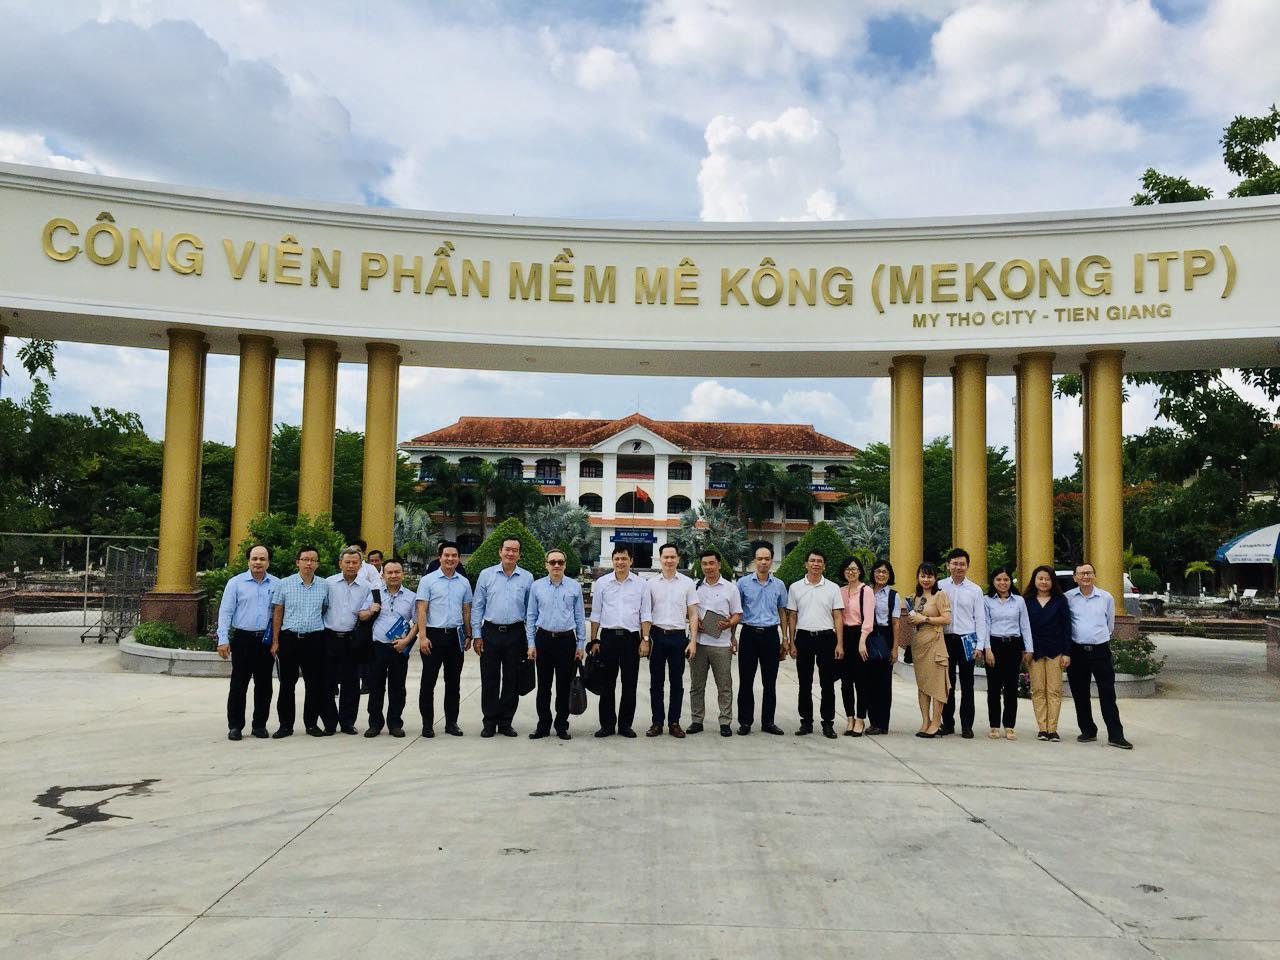 To visit and work at Mekong ITP